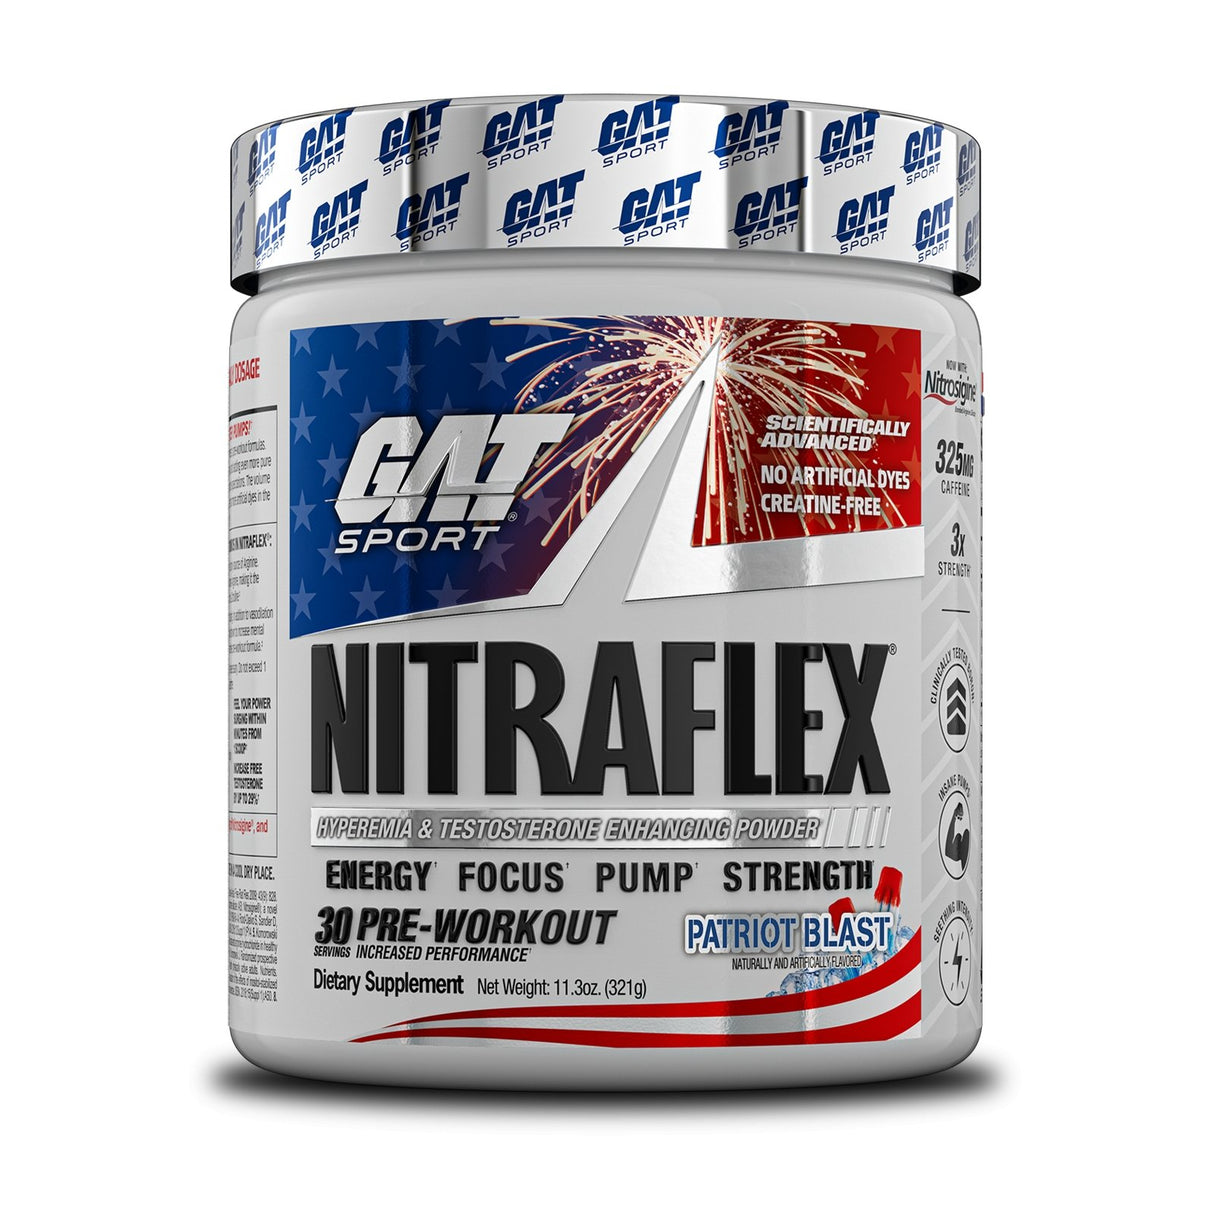 GAT SPORT NITRAFLEX ADVANCED Pre-Workout - patriot blast